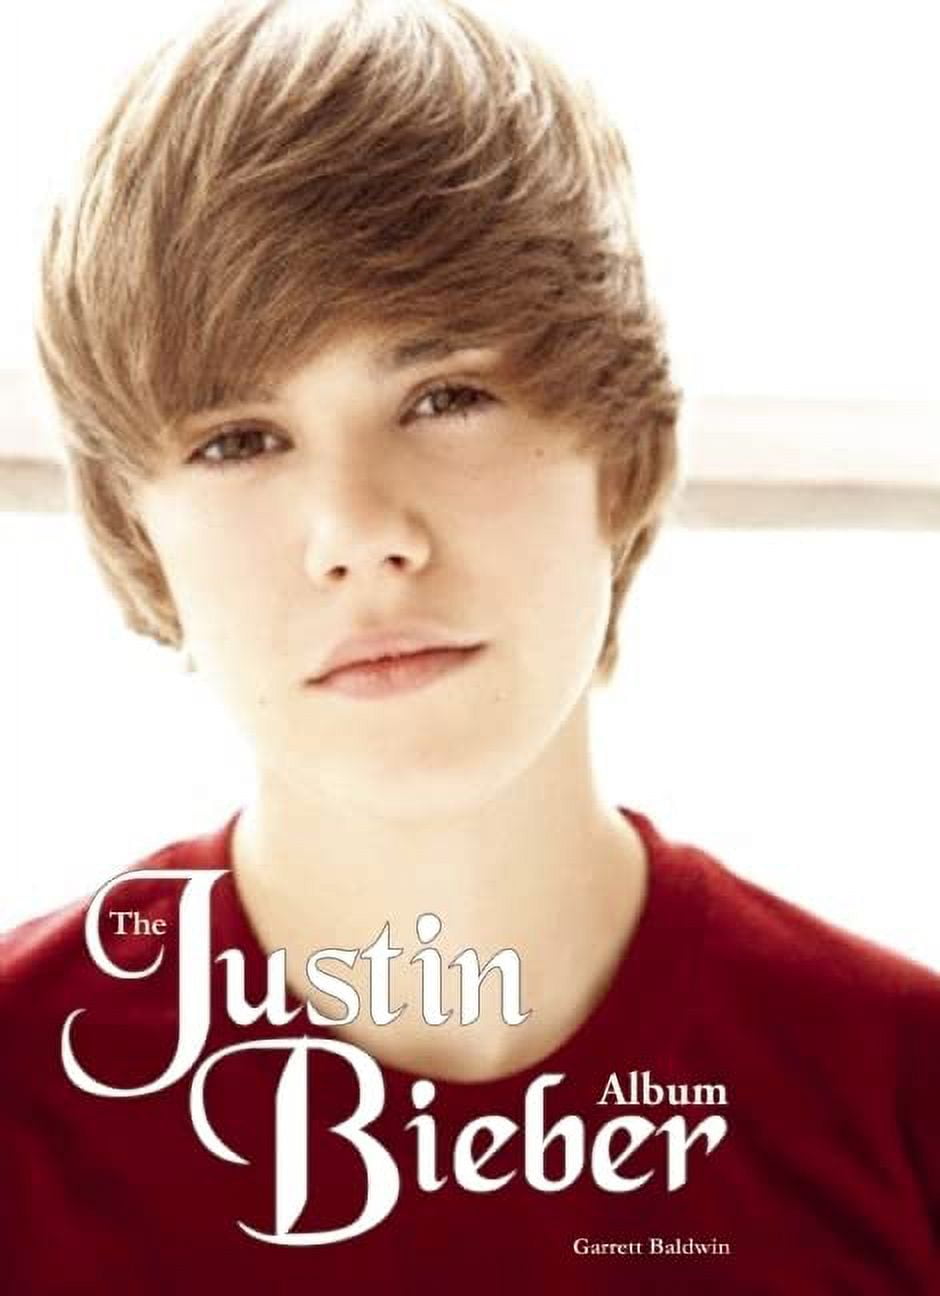 Justin Bieber discography - Wikipedia